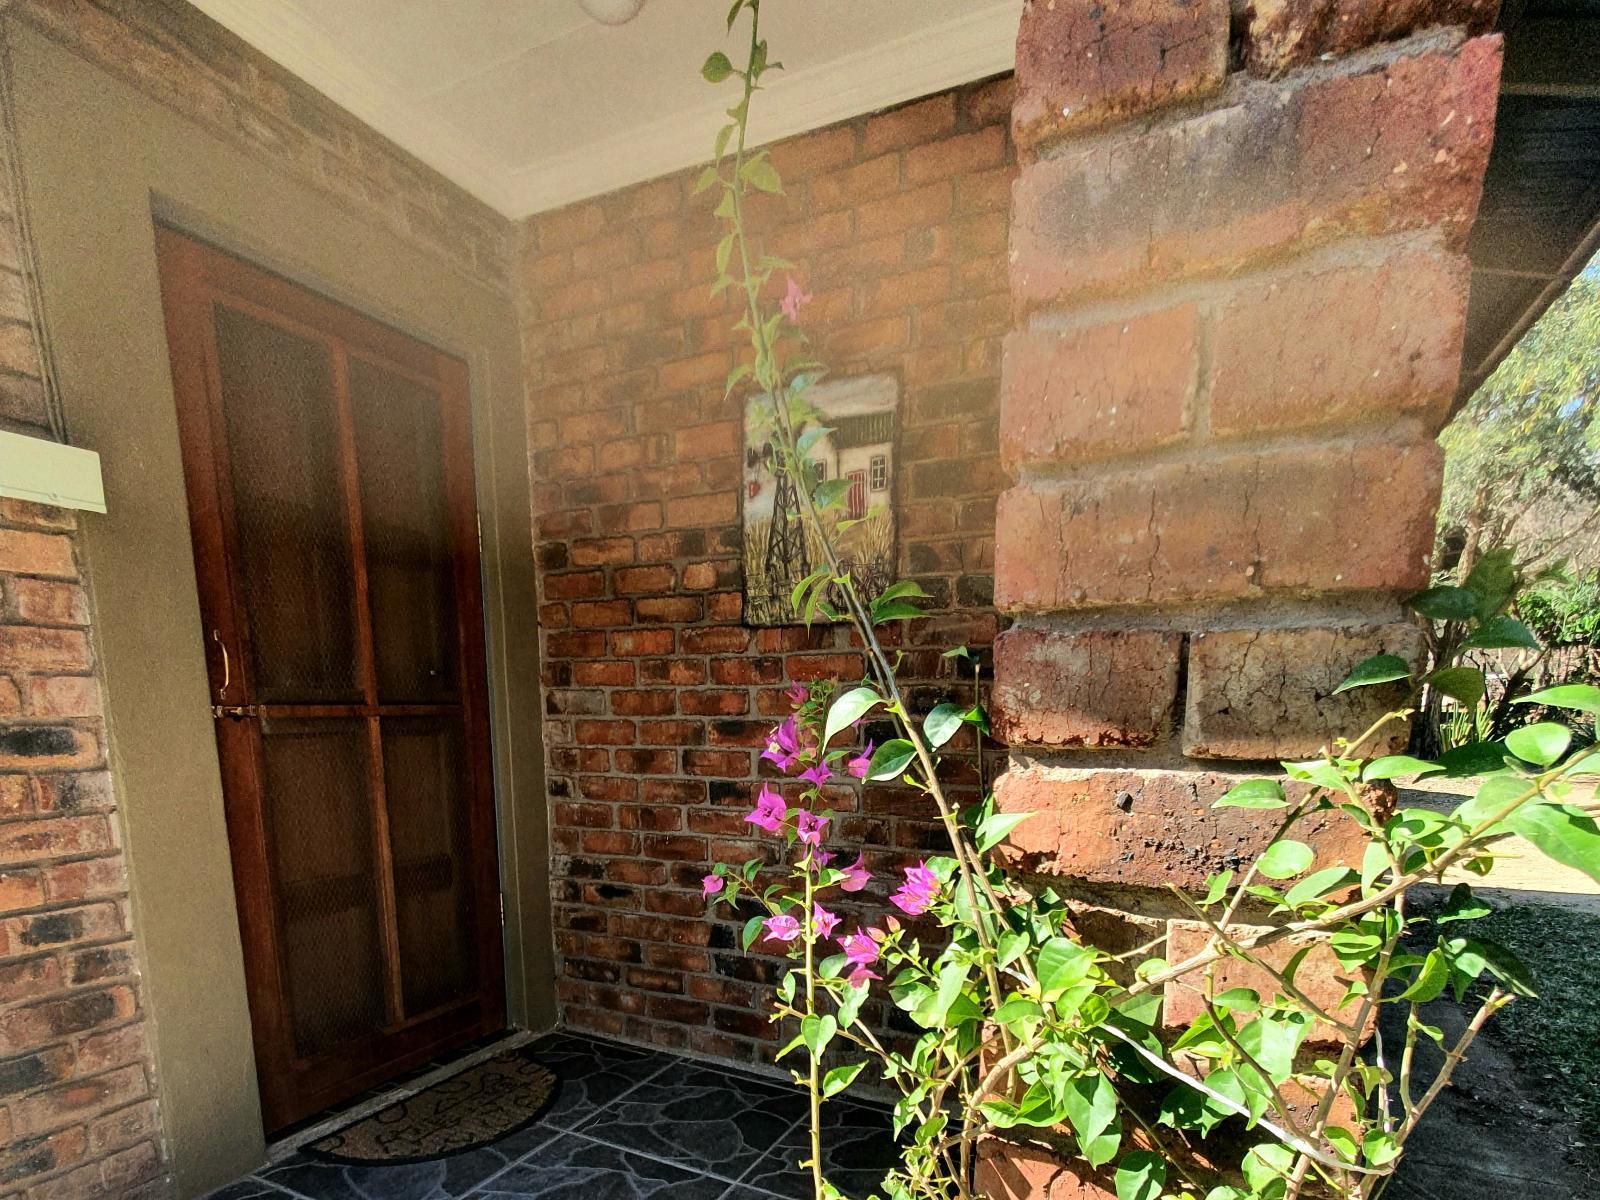 Doringpoort Lodge Marloth Park Mpumalanga South Africa Blossom, Plant, Nature, Flower, House, Building, Architecture, Wall, Brick Texture, Texture, Garden